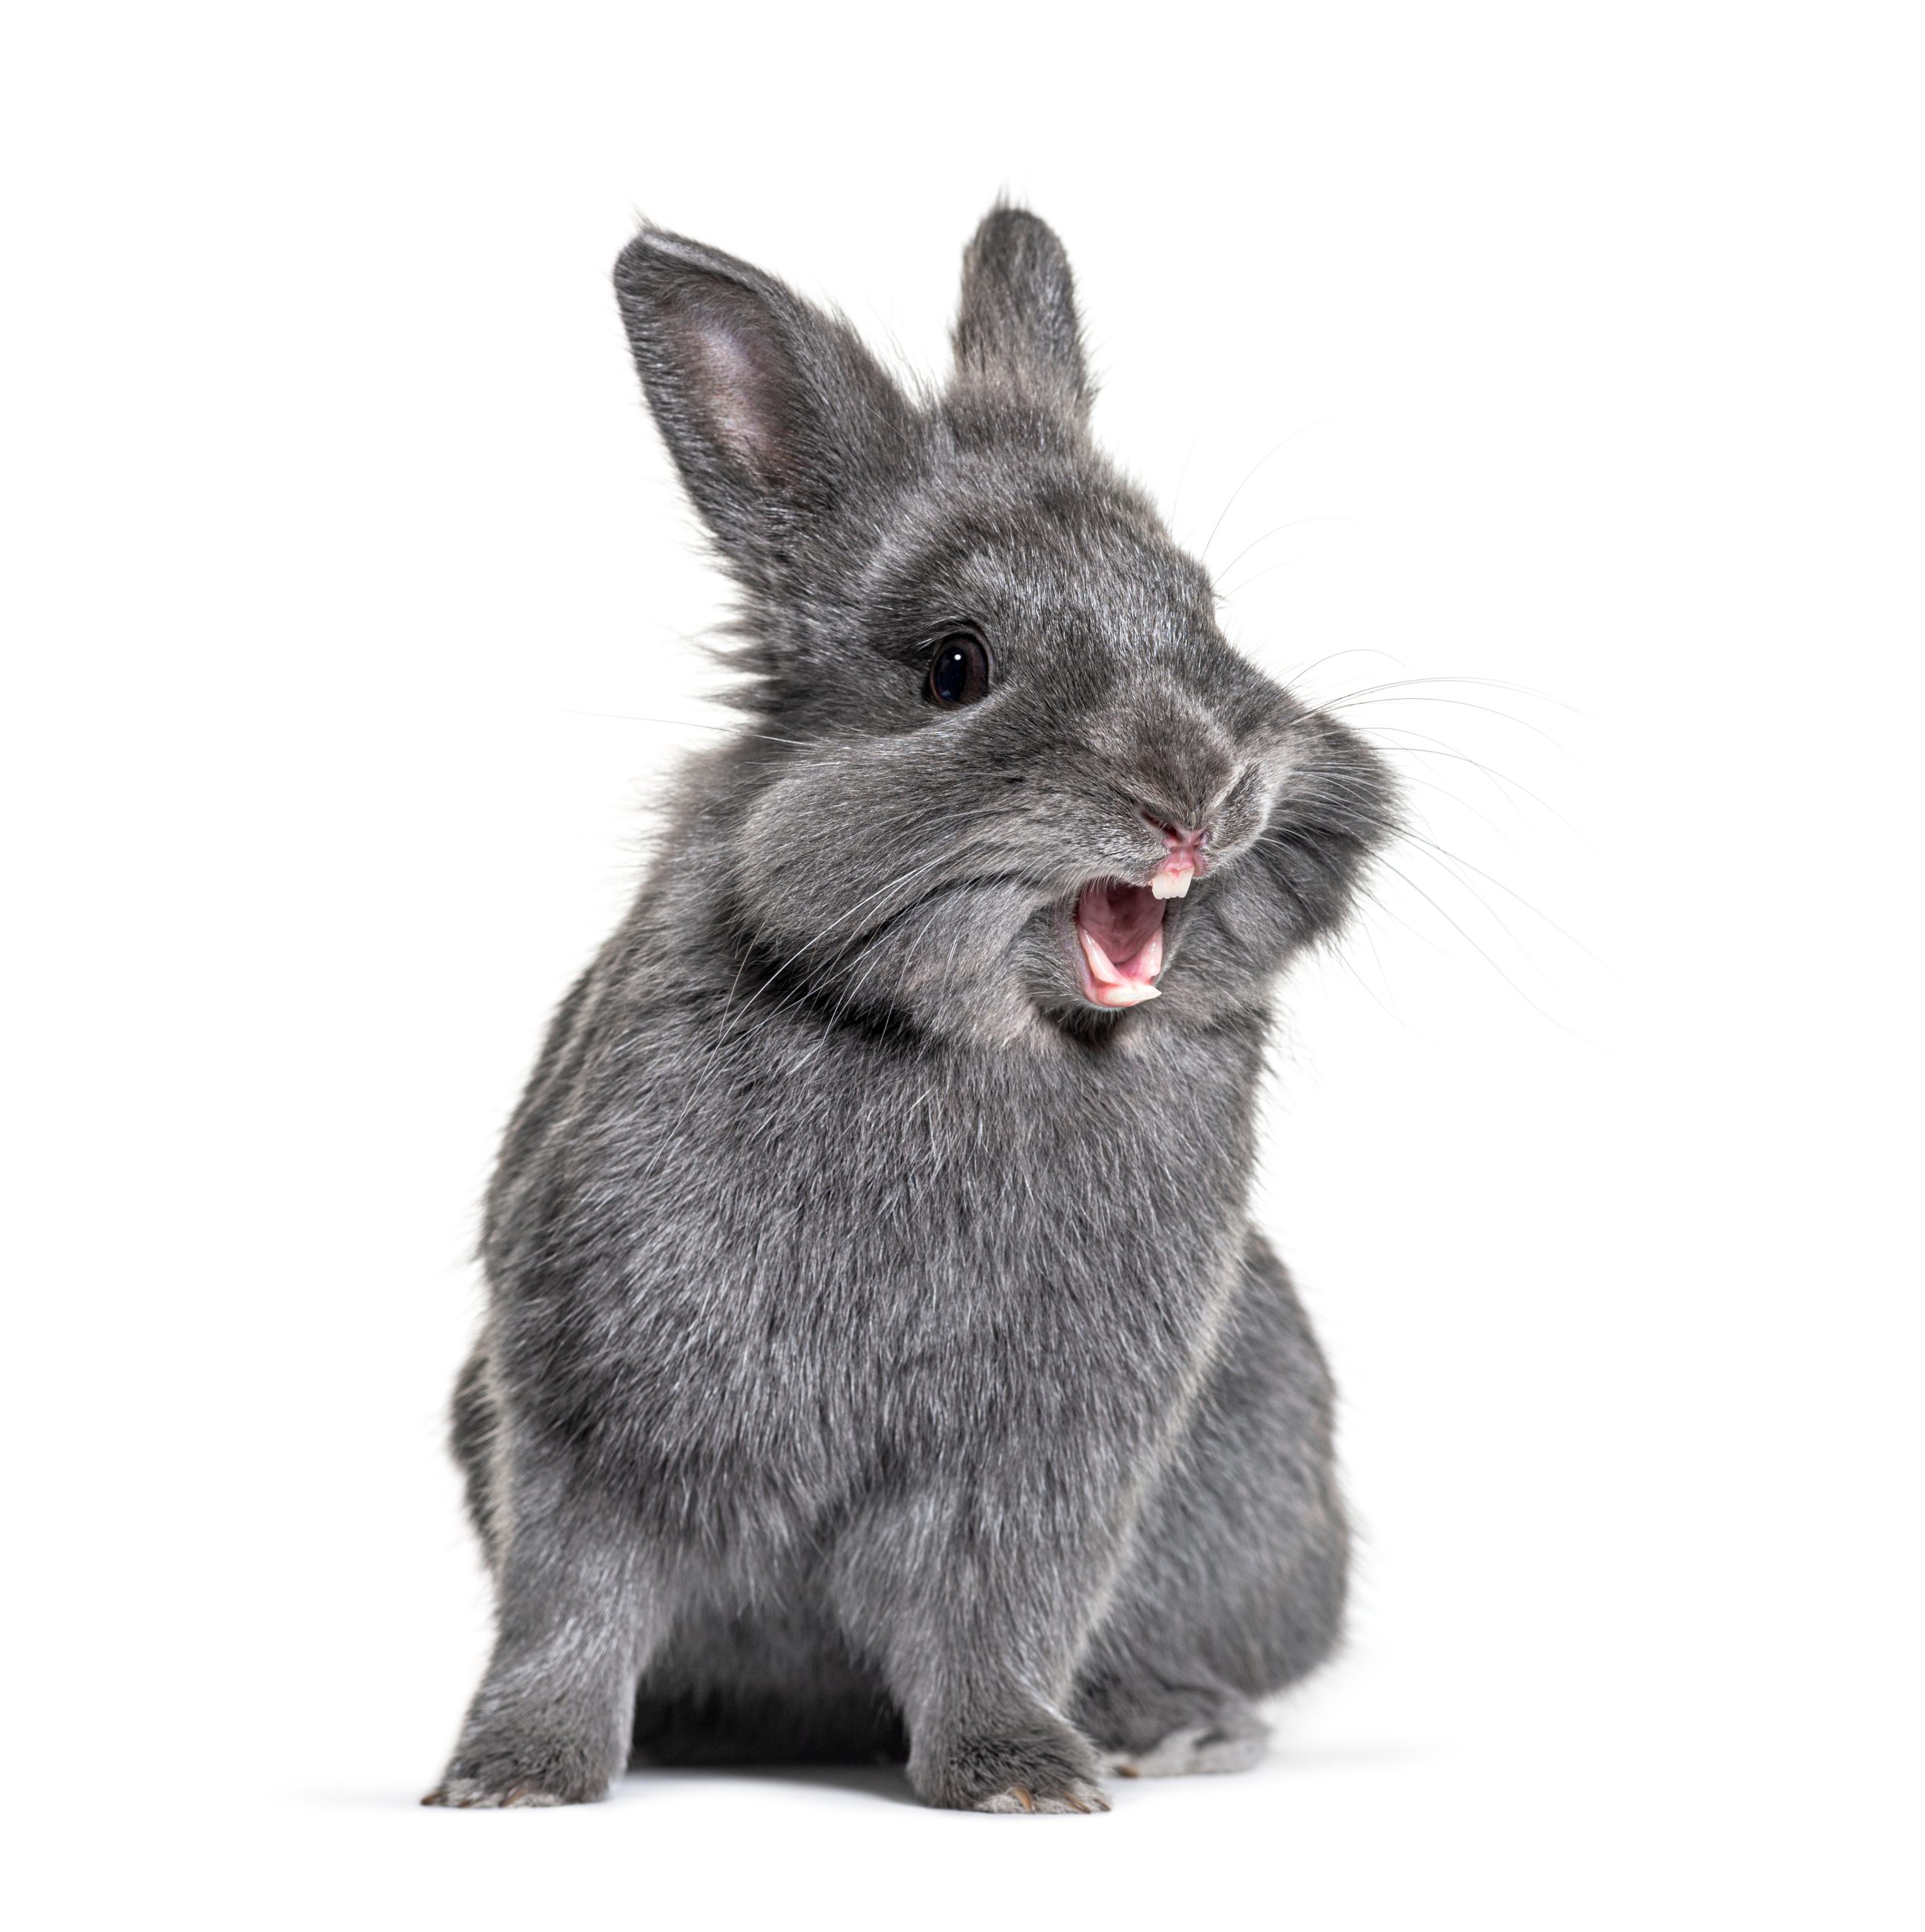 Risk Factors Of Rabbit Bites